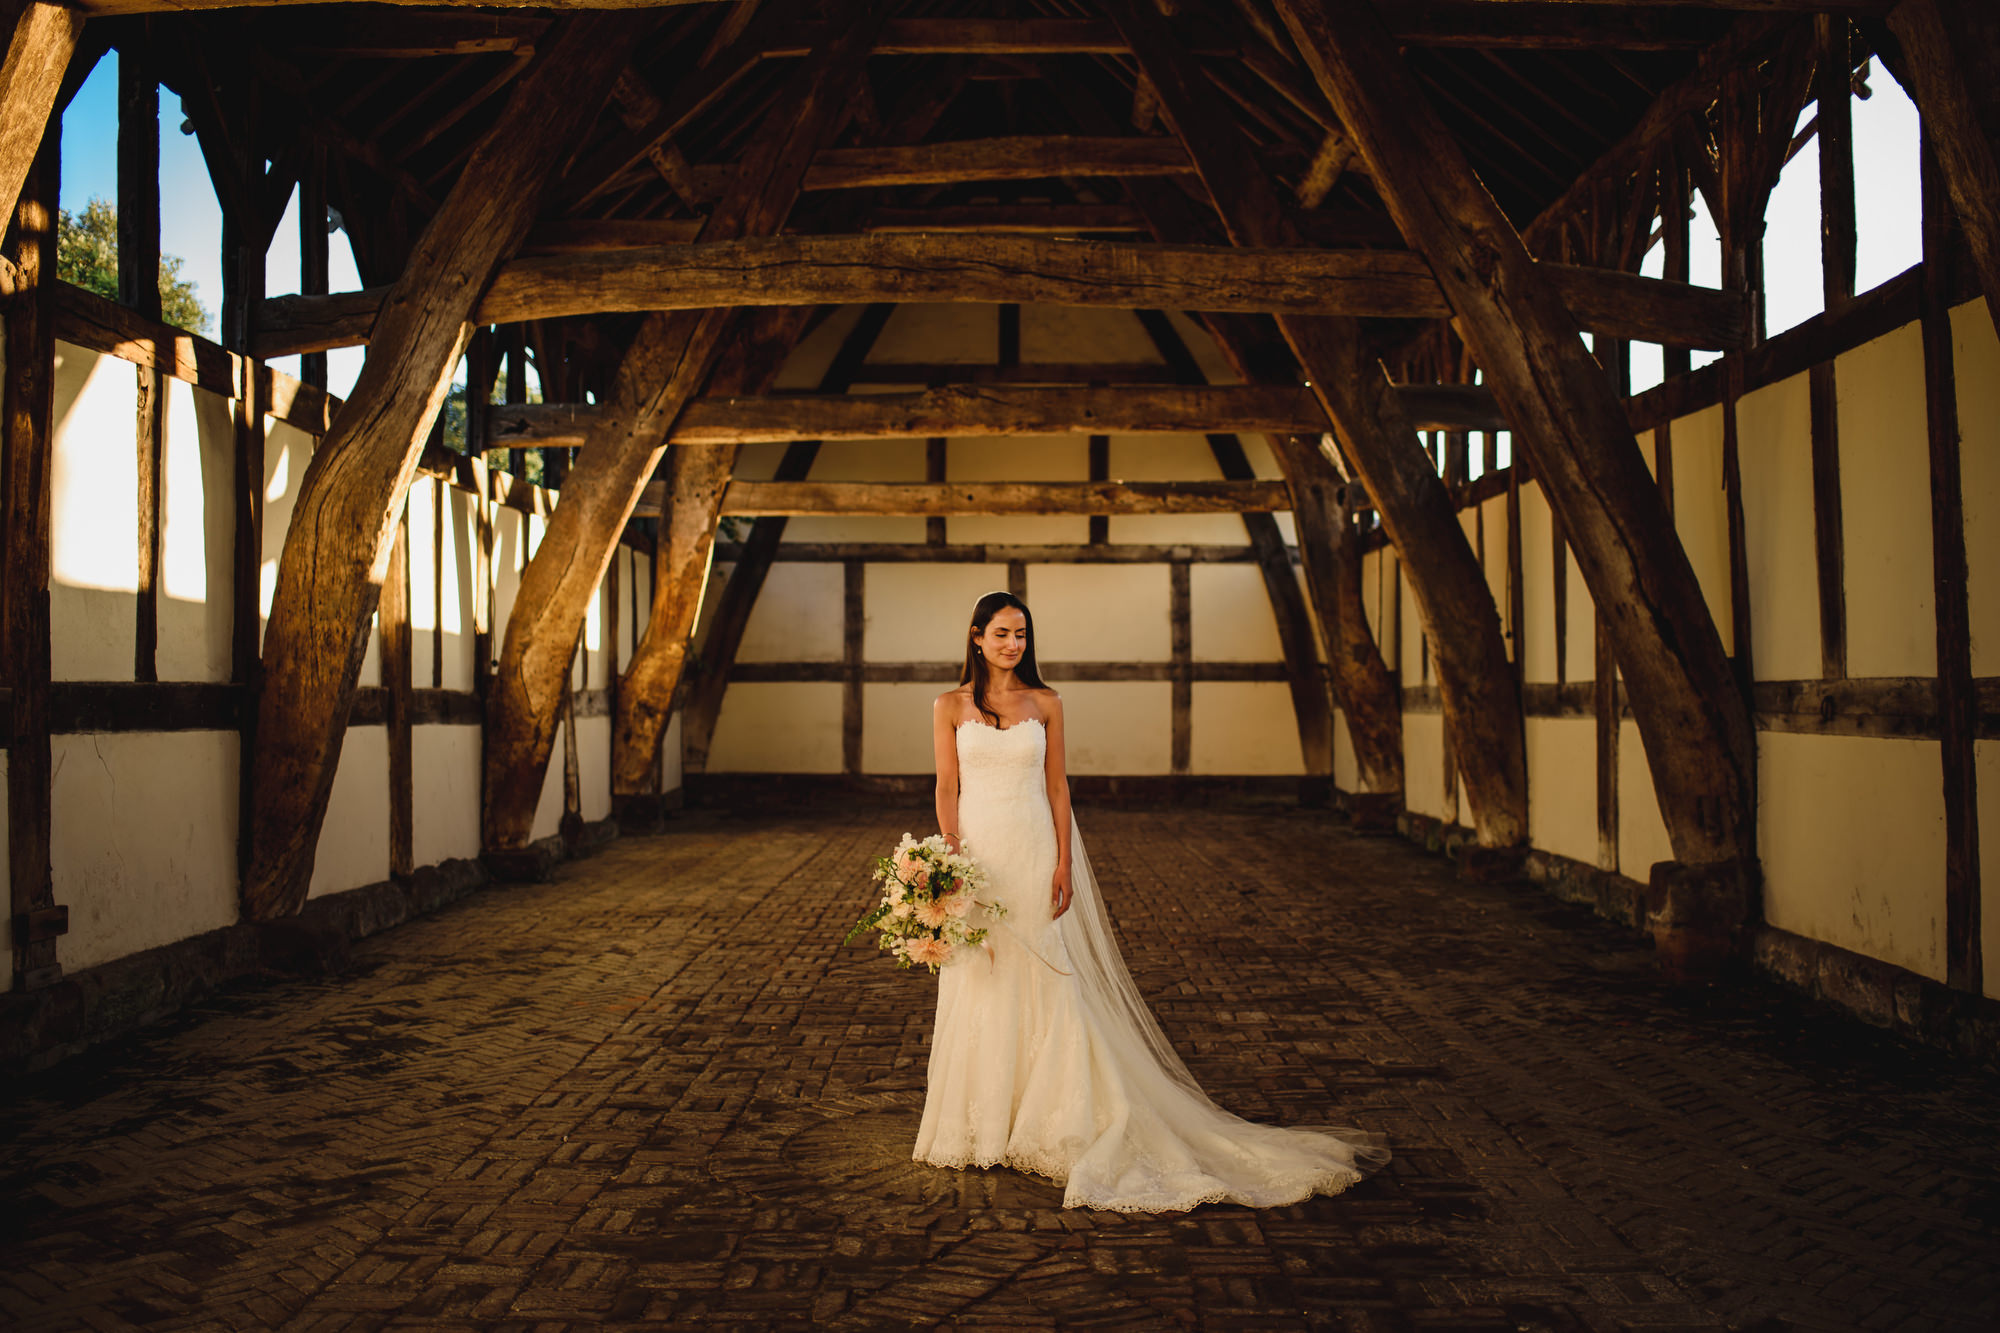 Best cheshire wedding photographer 2014